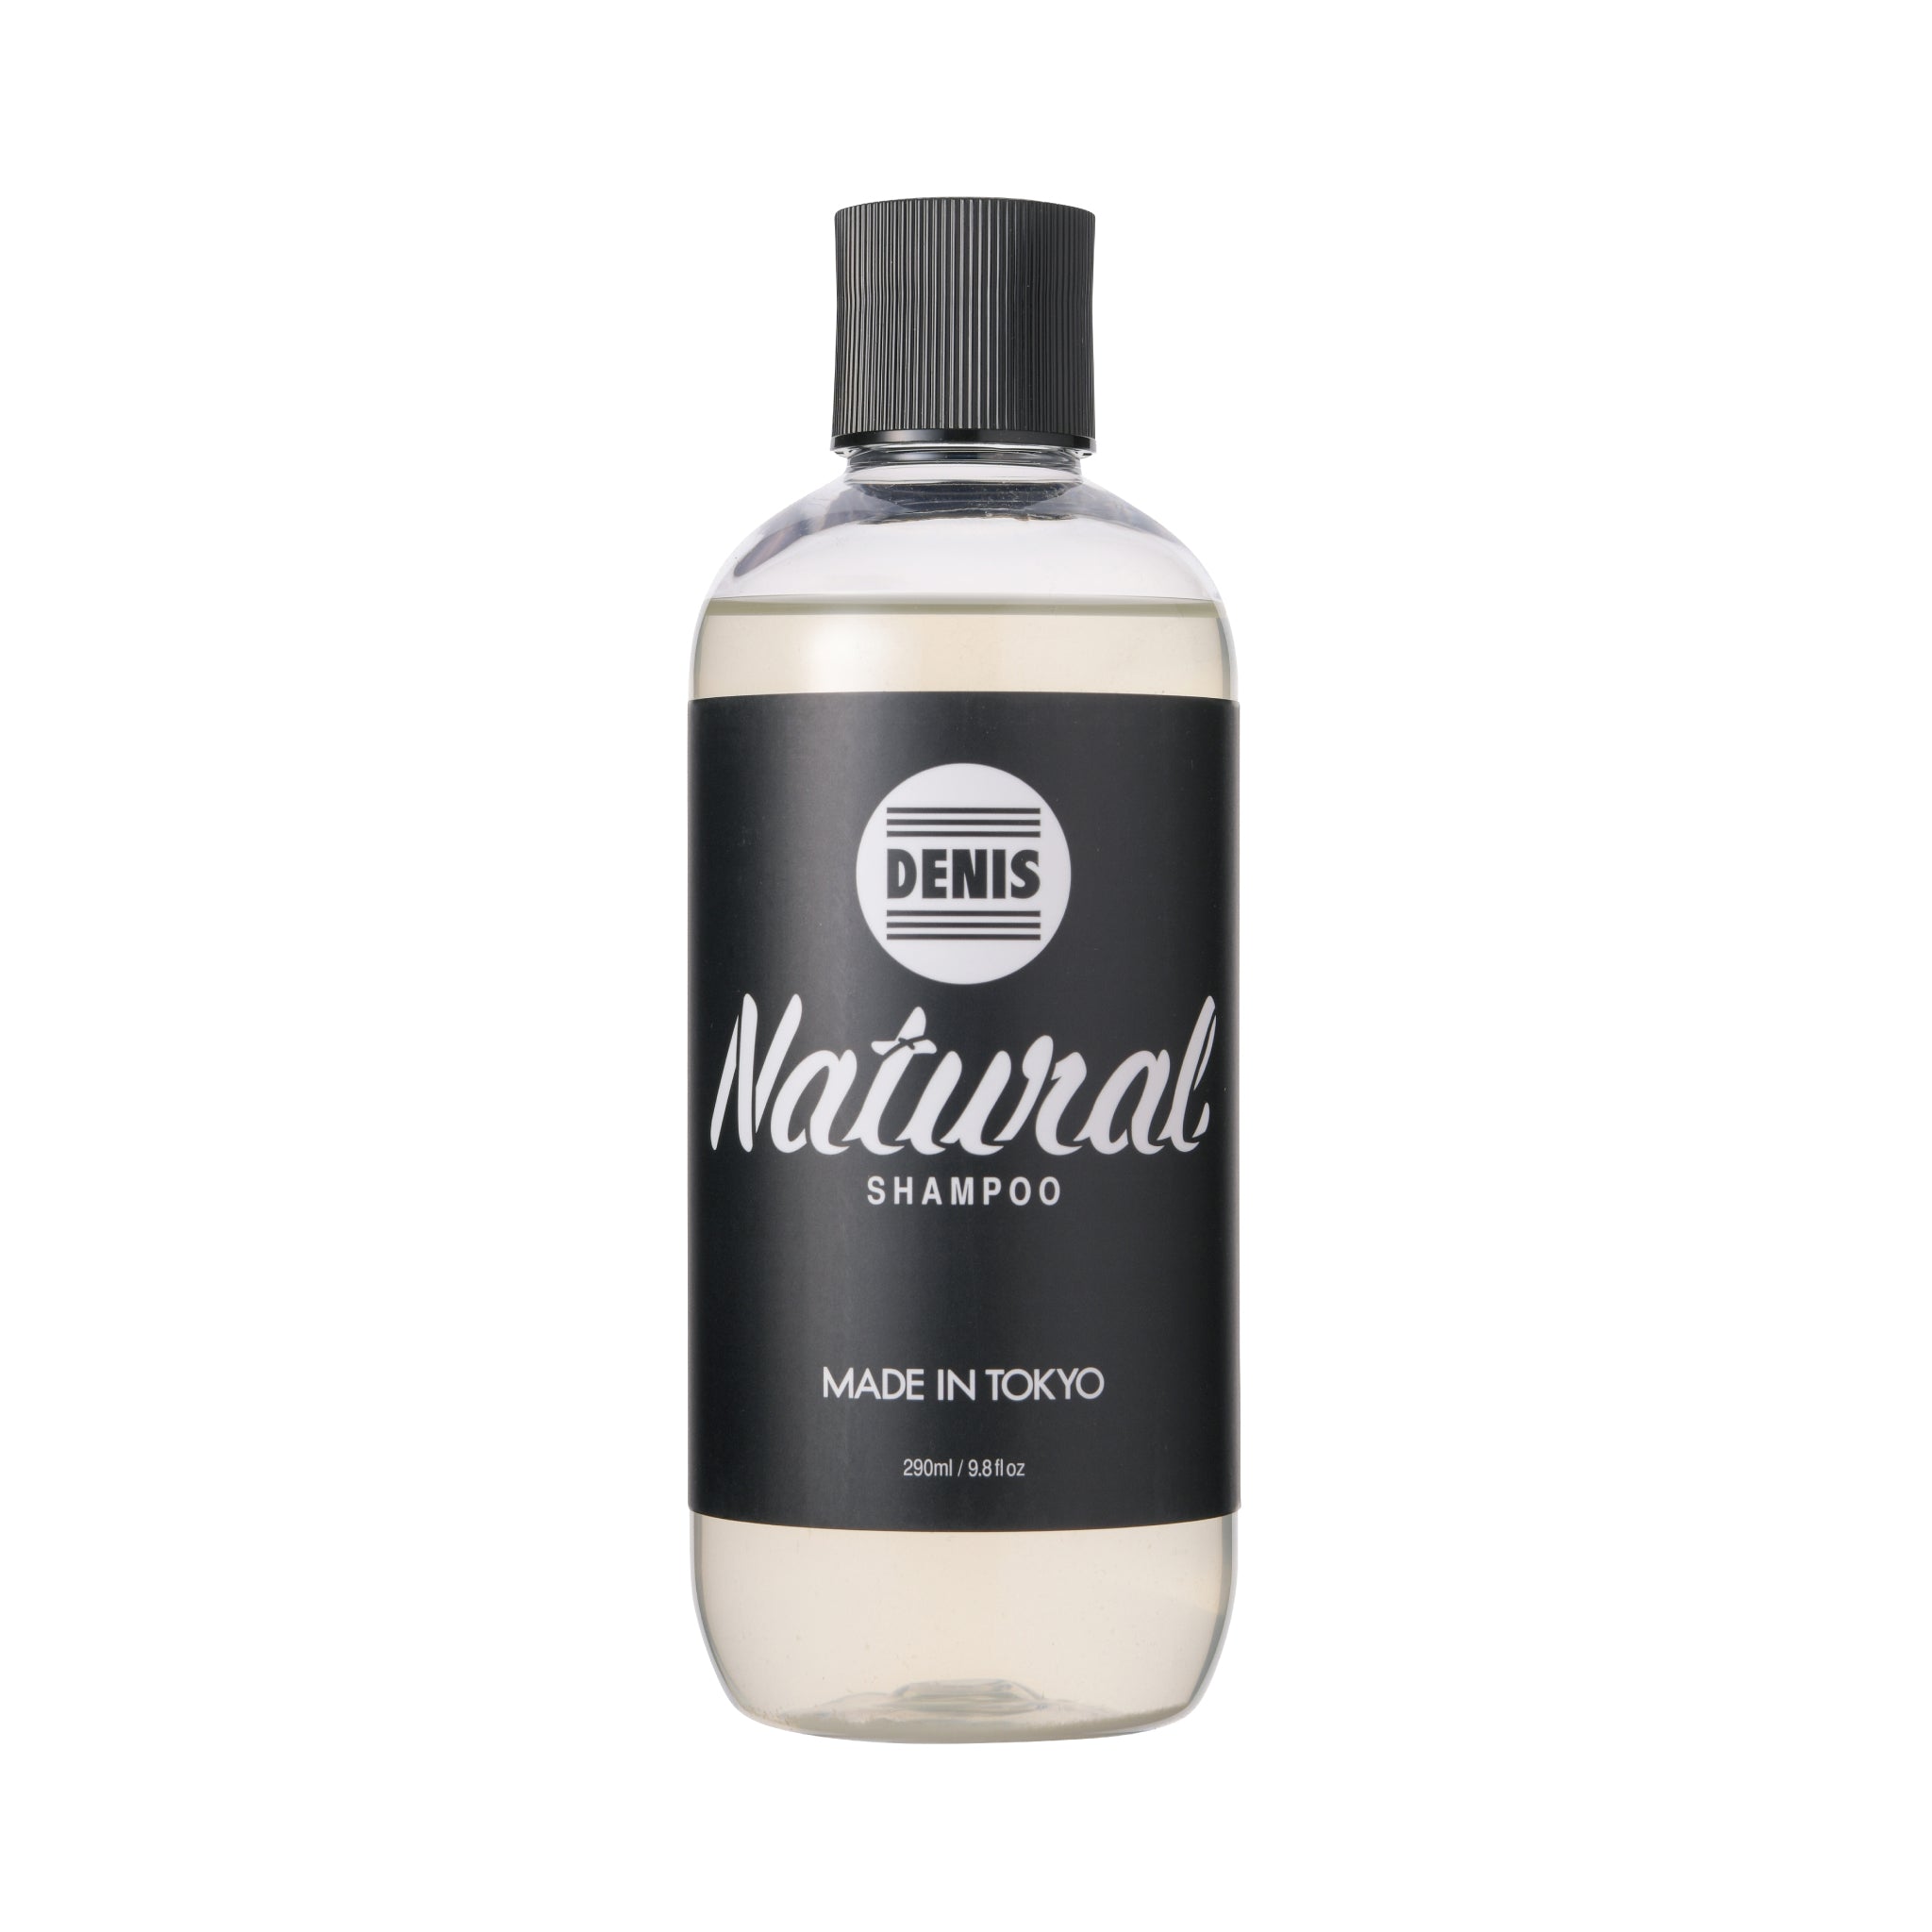 Natural Shampoo 290ml (with benefits)